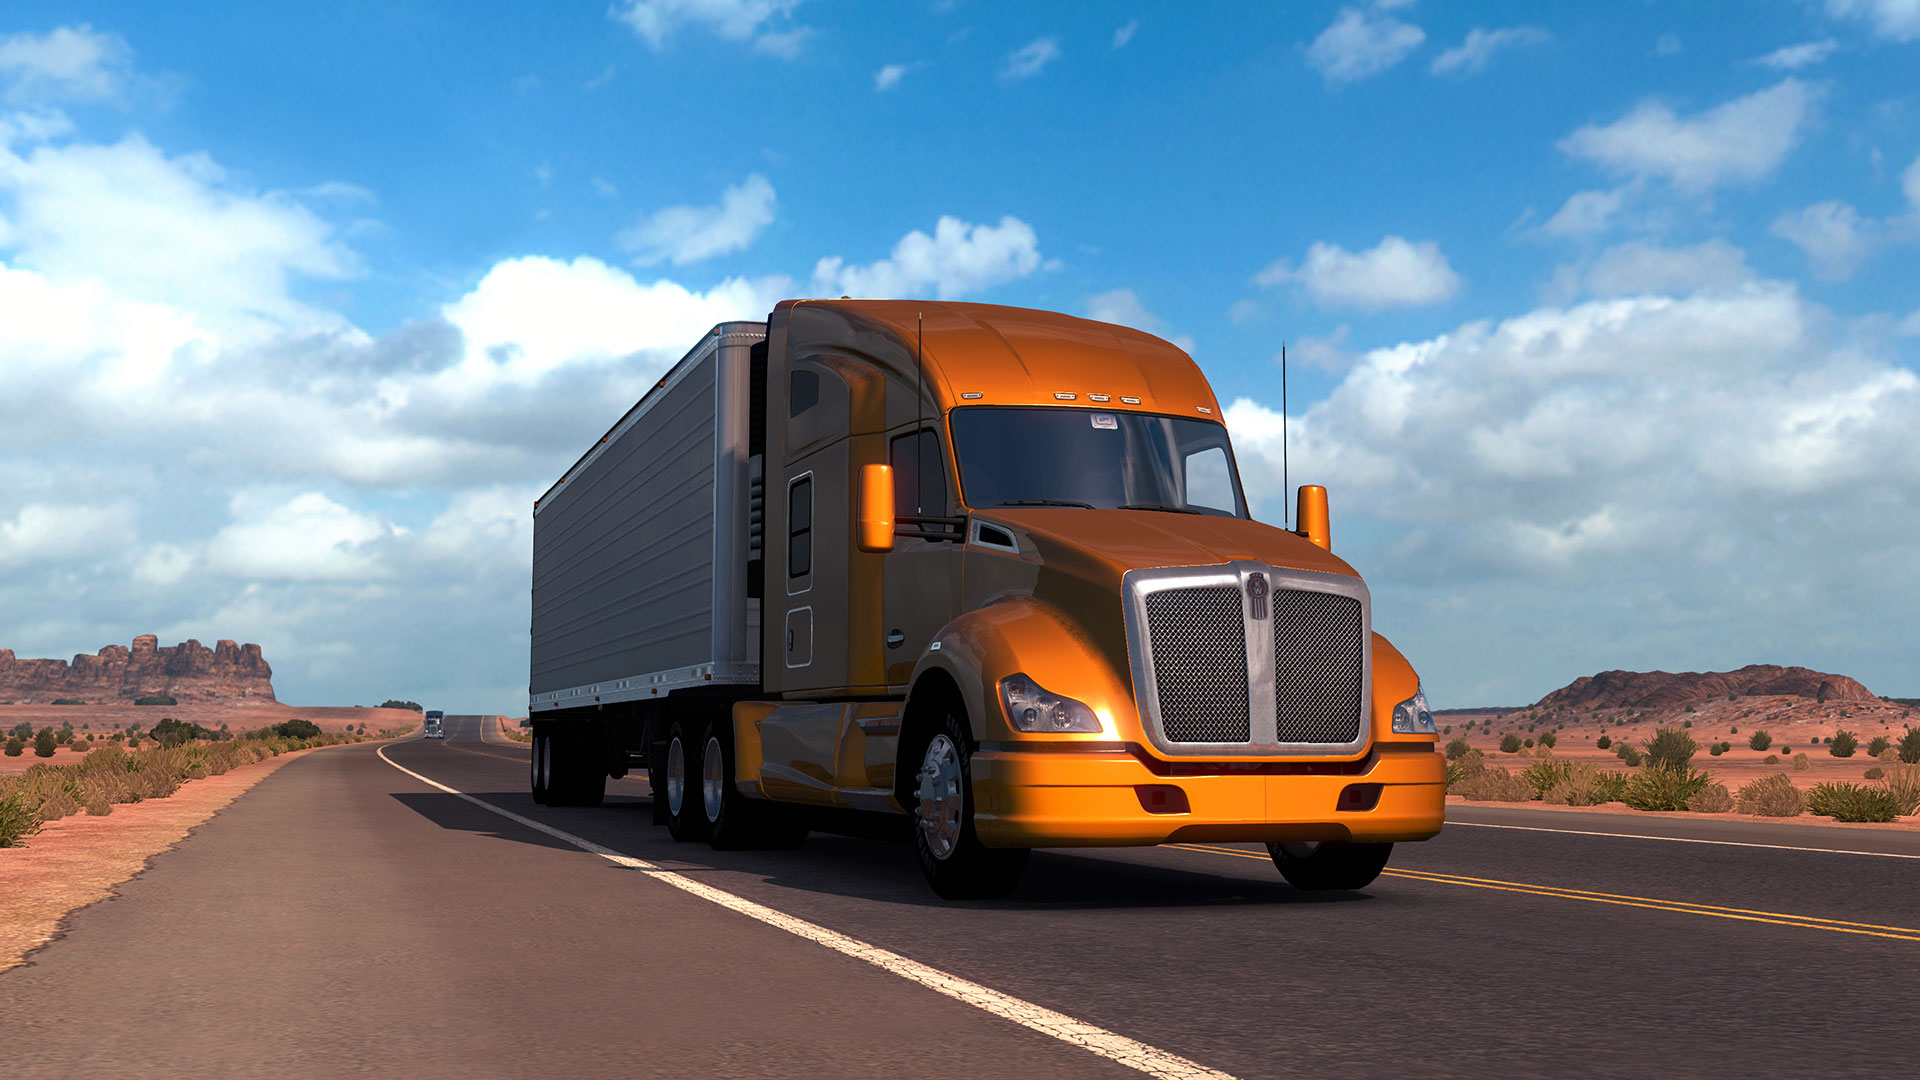 American Truck Simulator On Steam